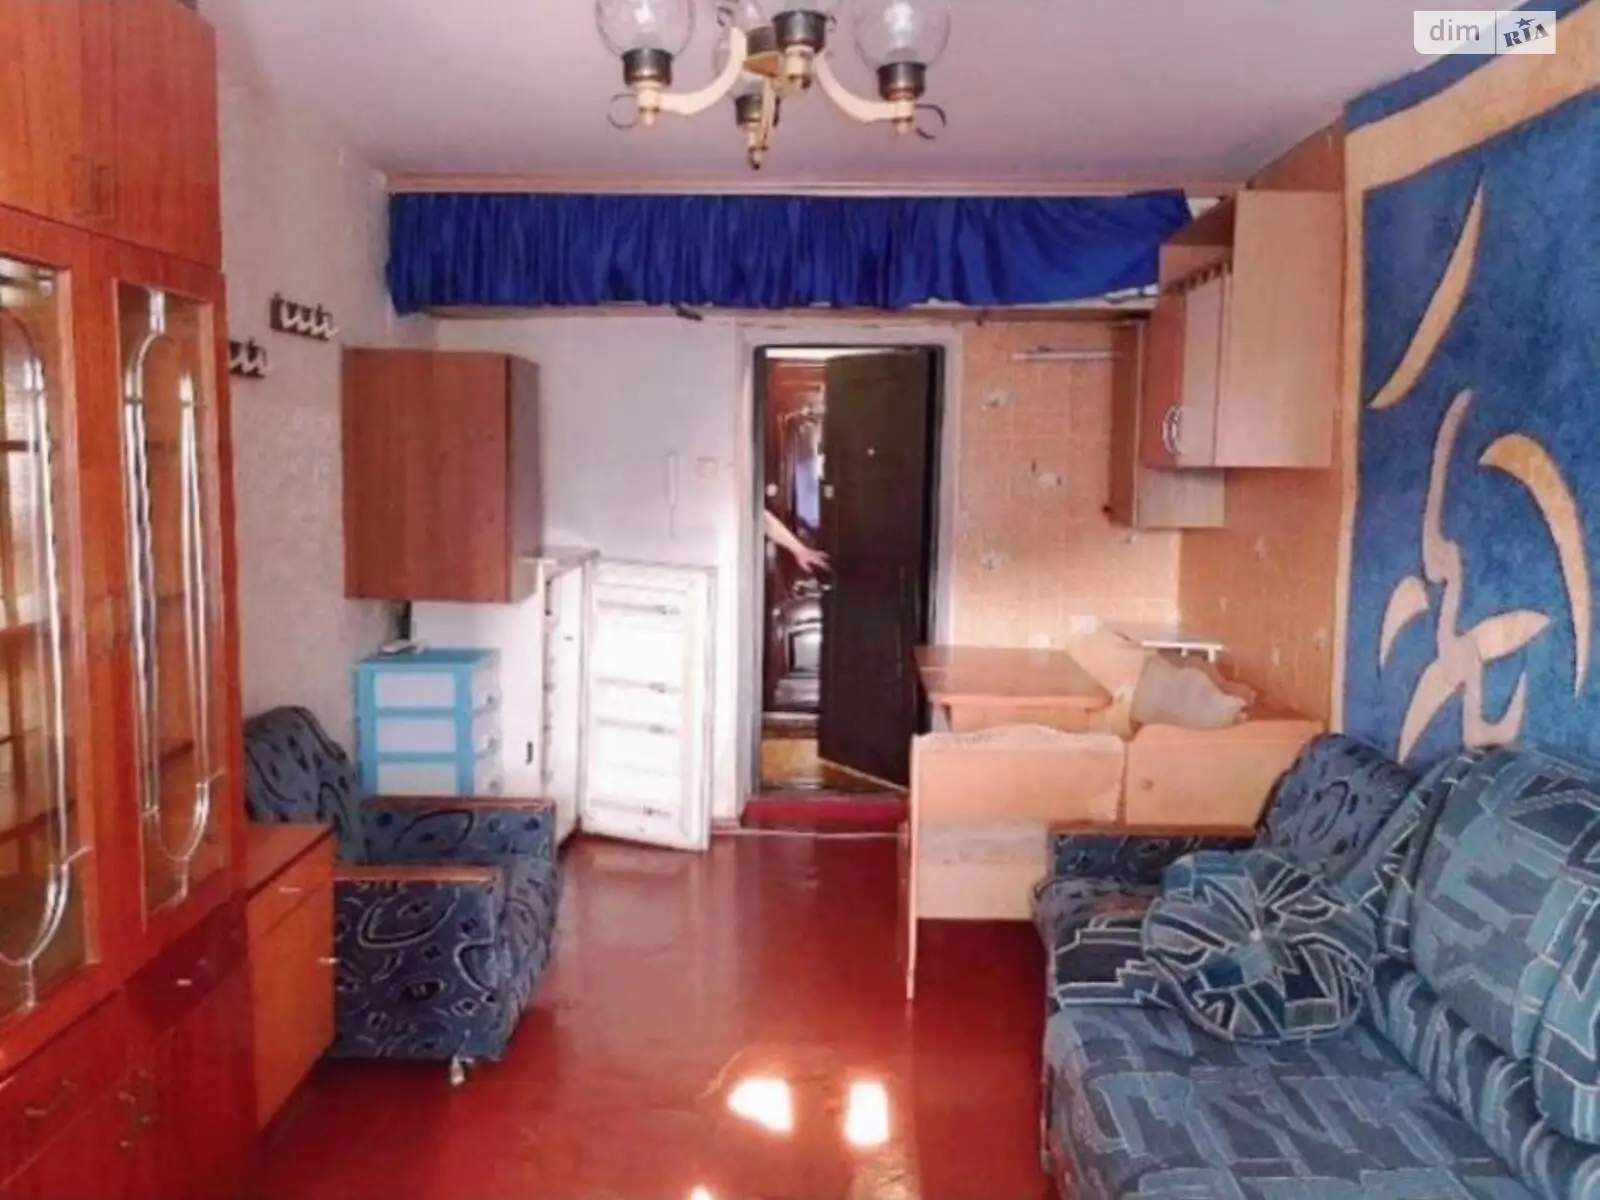 Продается комната 22 кв. м в Одессе, цена: 9000 $ - фото 1